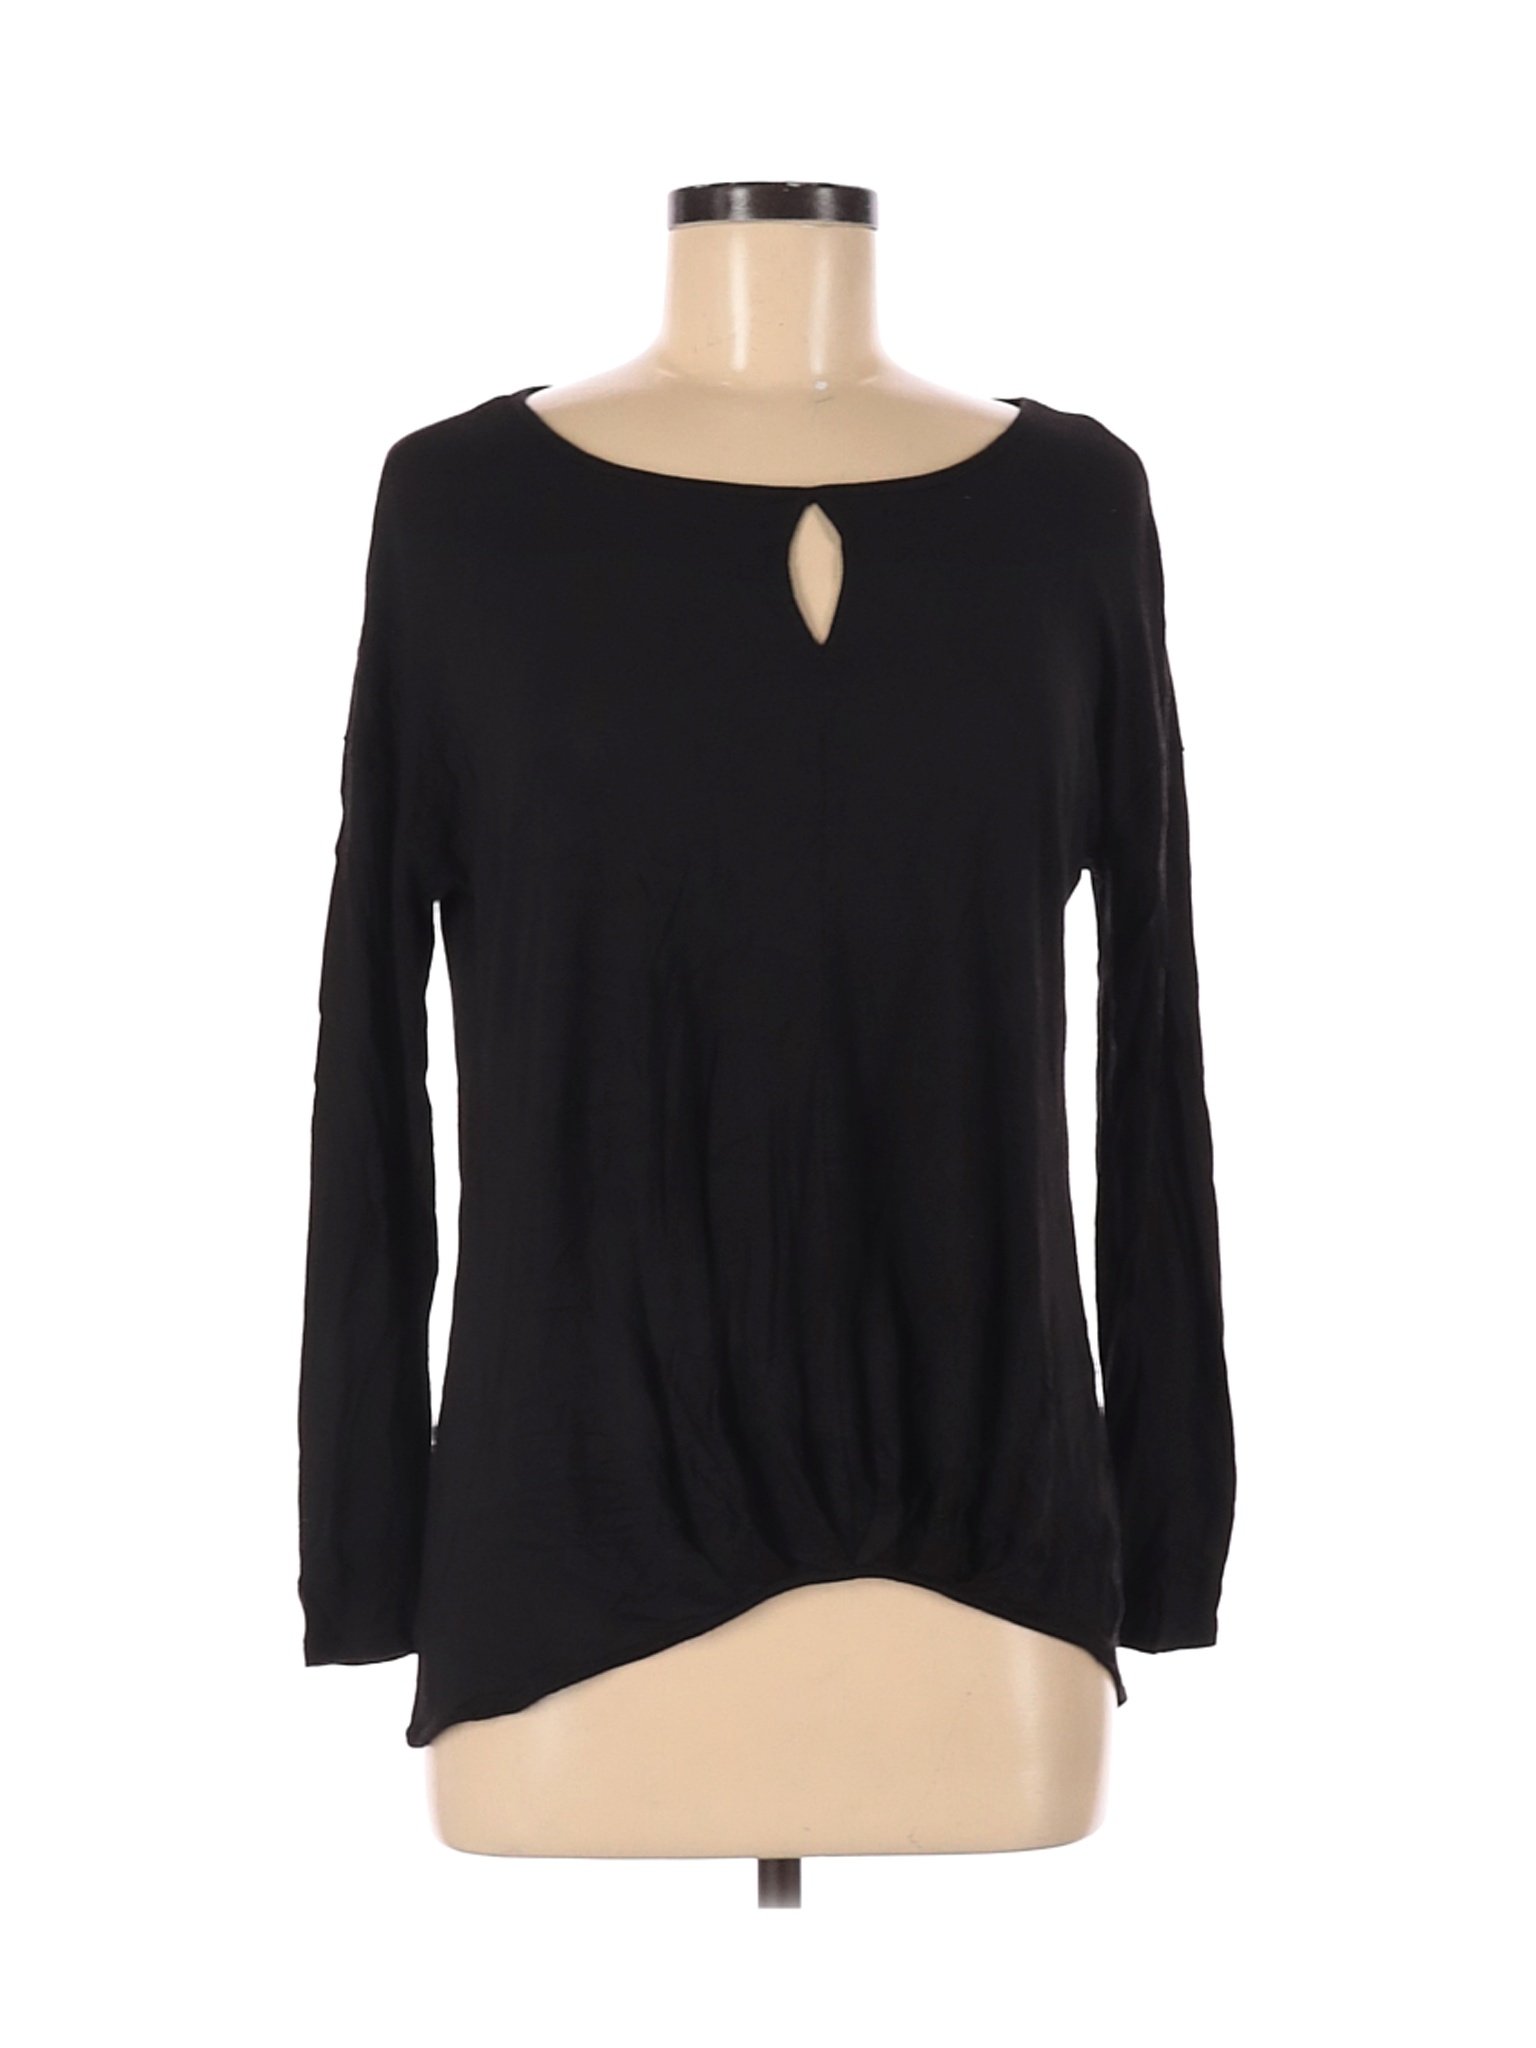 Daisy Fuentes Women Black Long Sleeve Top M | eBay